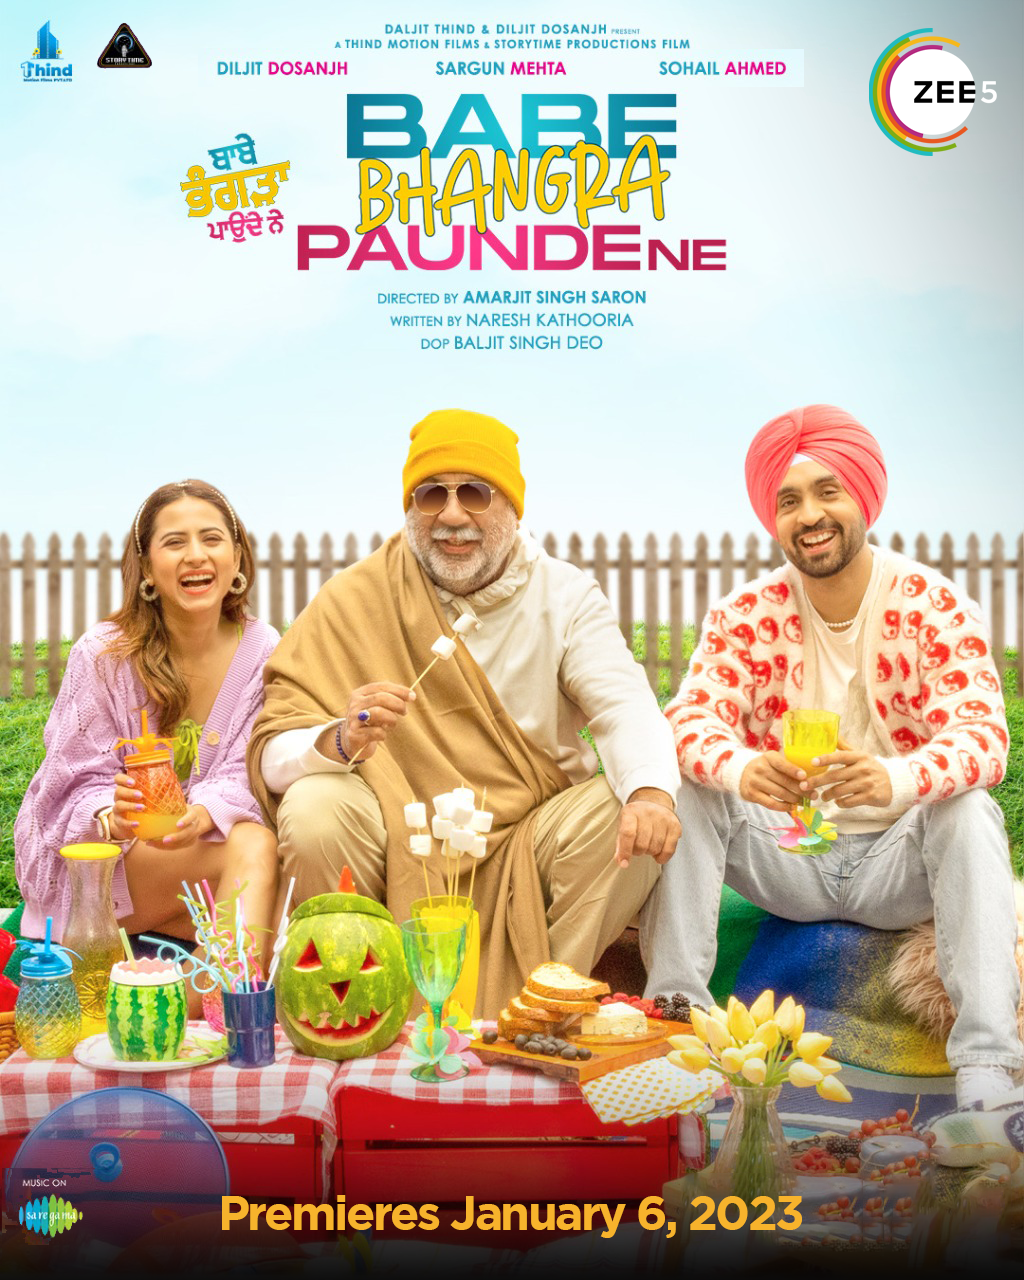 ZEE5 Global announces the World Digital Premiere of 'Babe Bhangra Paunde  Ne' Starring Diljit Dosanjh and Sargun Mehta - Digital Studio Middle East